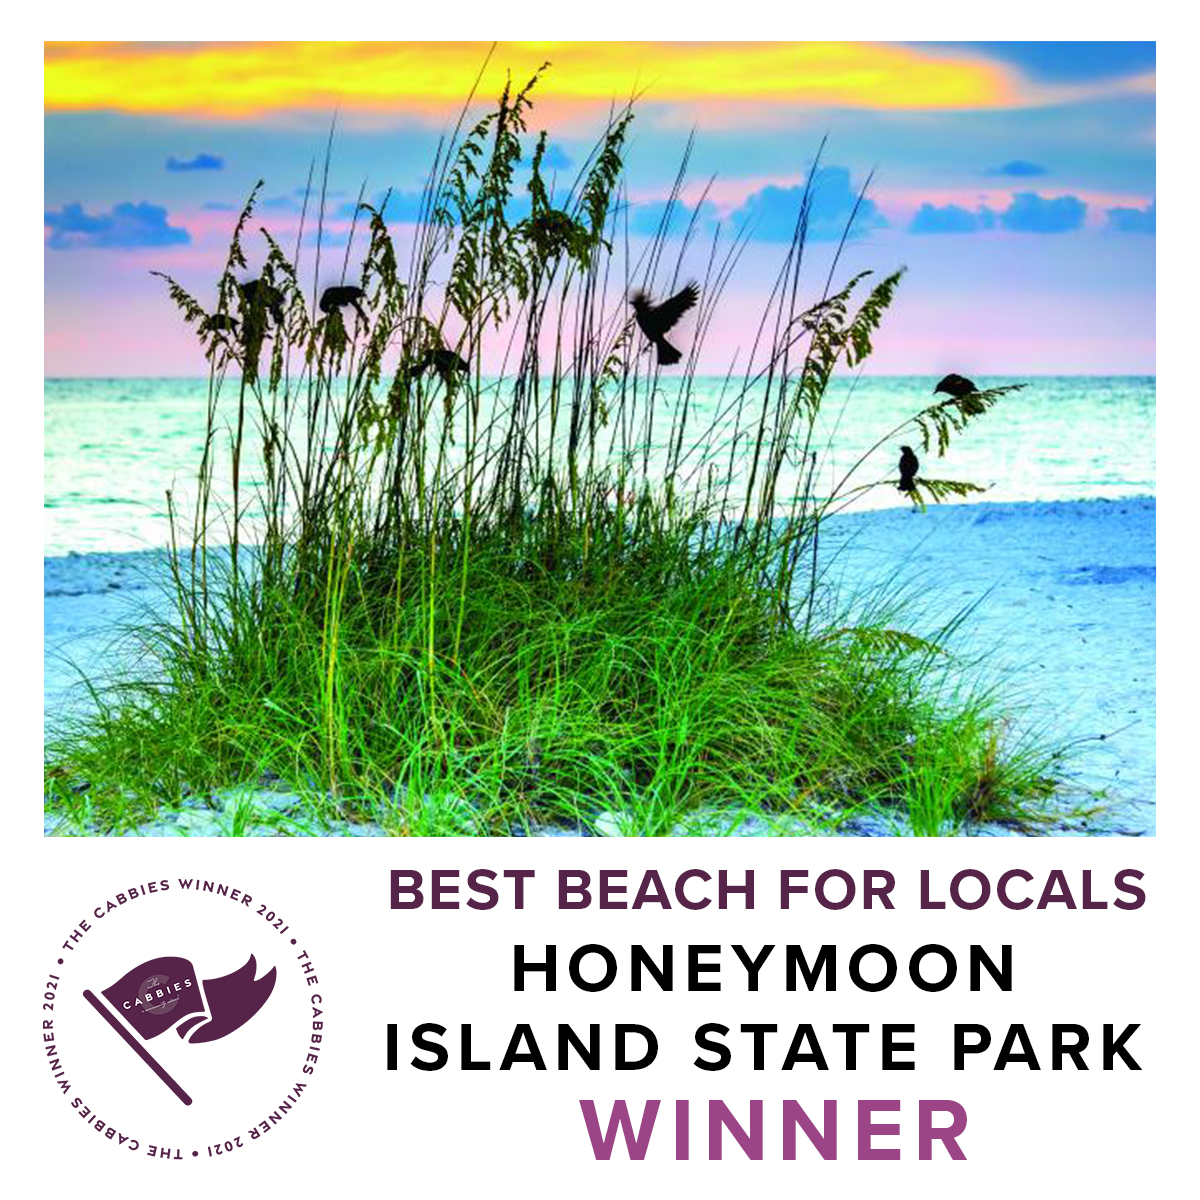 best beach winner - honeymoon island state park